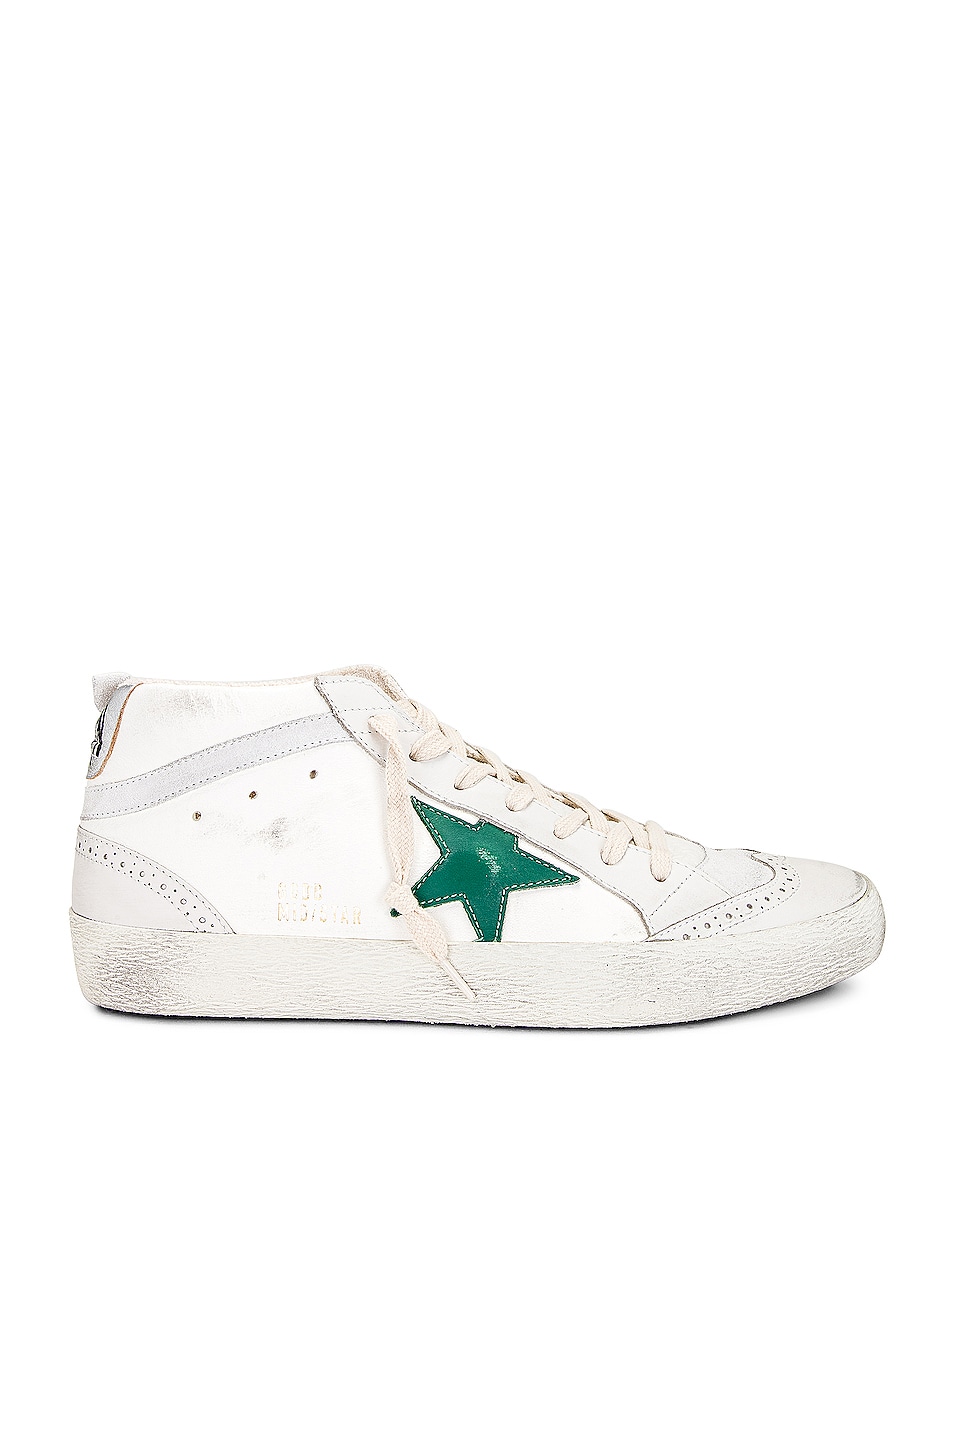 Image 1 of Golden Goose Mid Star Sneaker in Cream, Milky, Green, White, & Silver